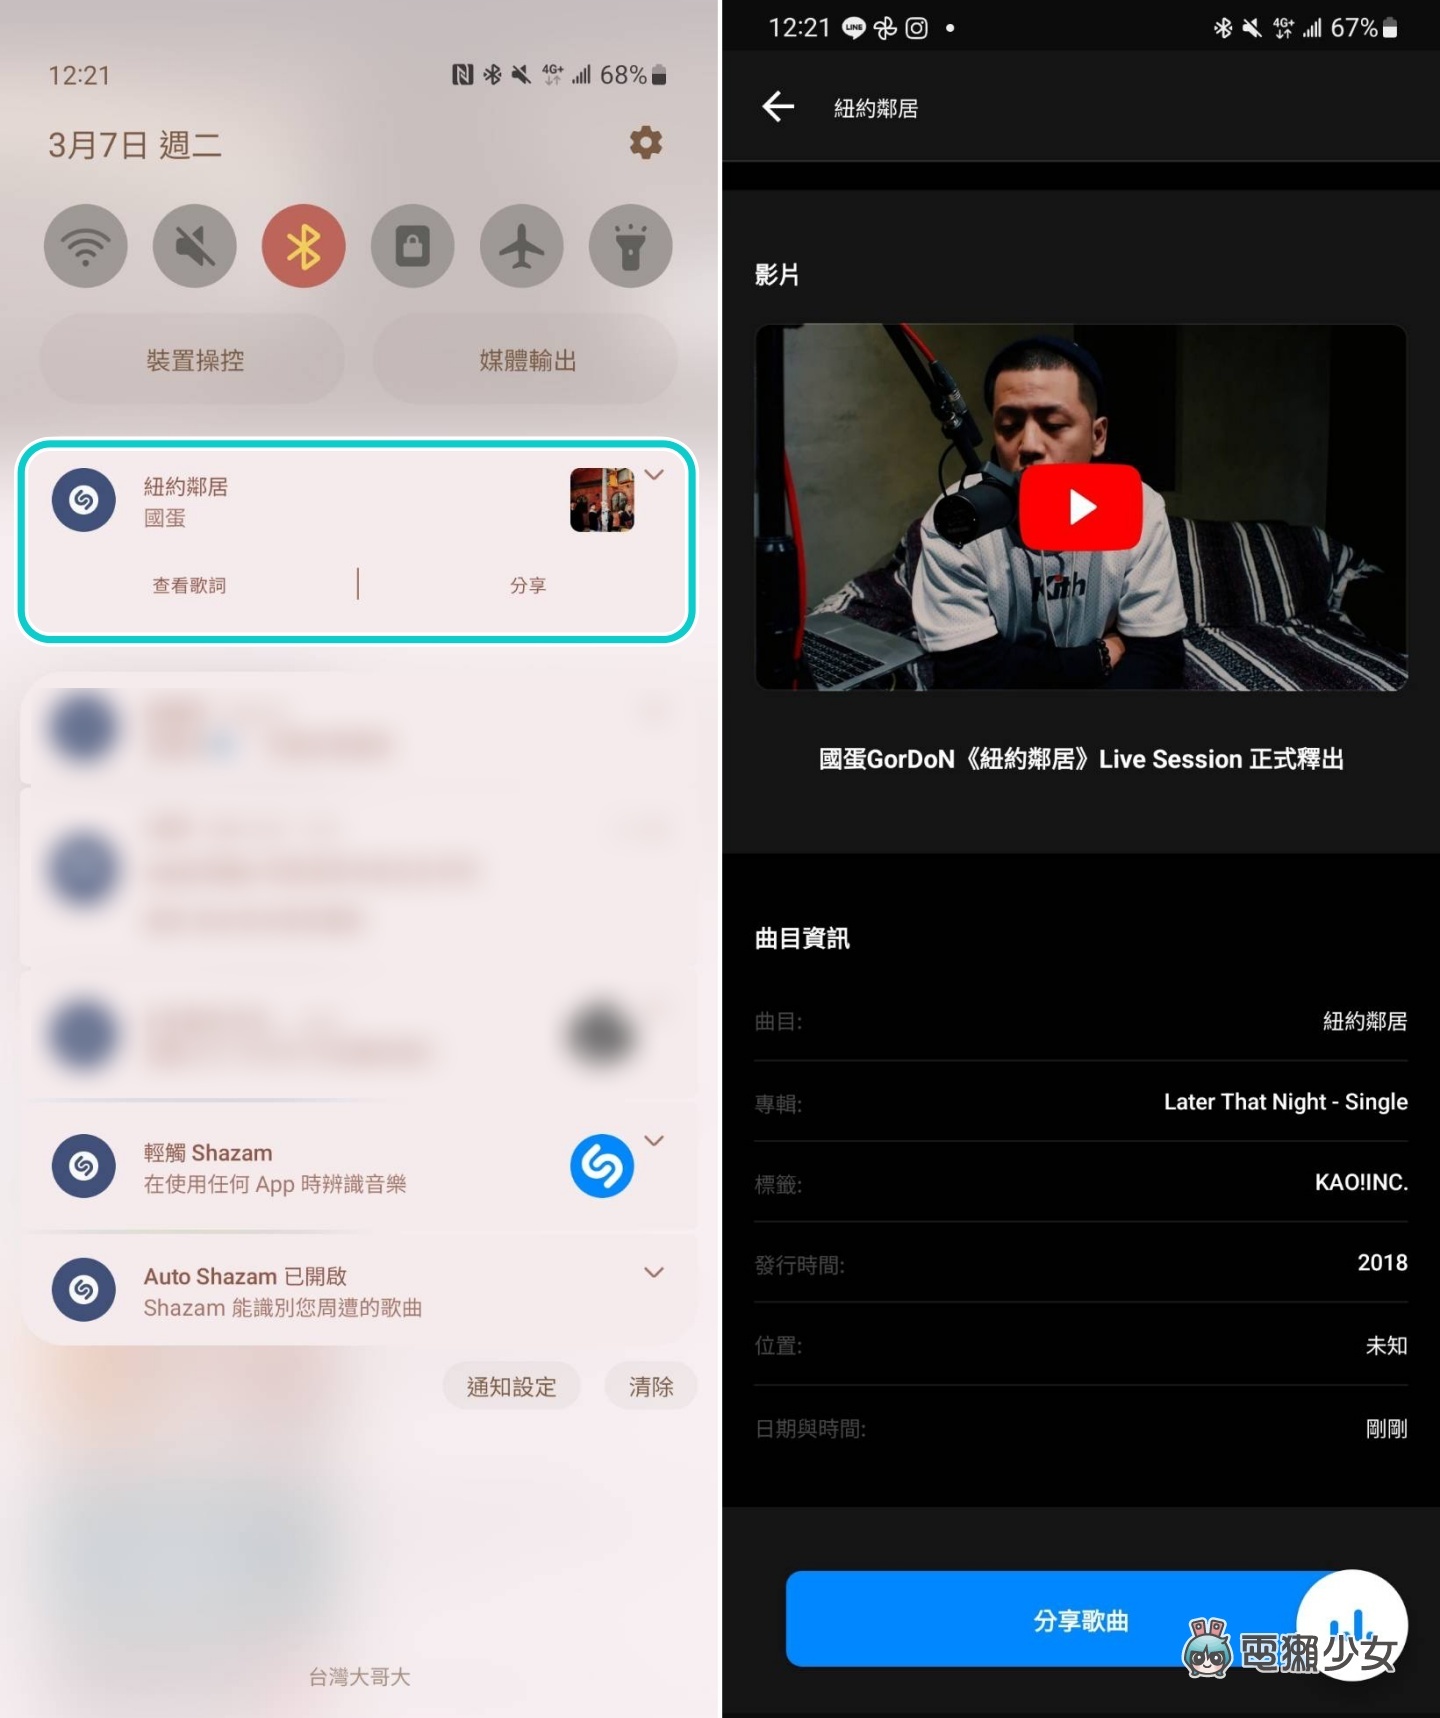 Android 手機看劇時也能用 Shazam 找歌！速度有比 iPhone 快嗎？實測結果分享